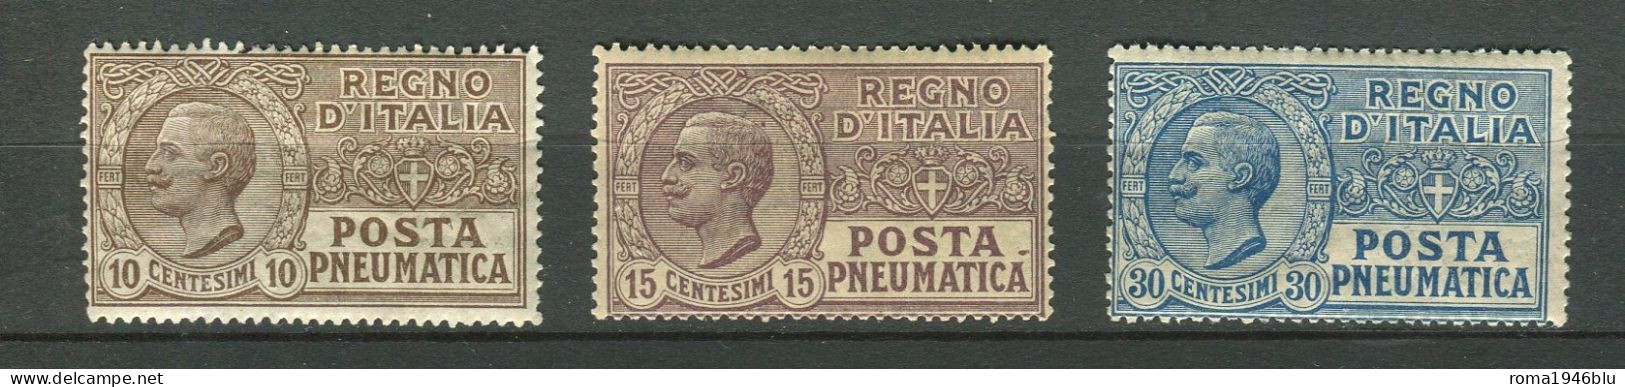 REGNO 1913-23 POSTA PNEUMATICA SERIE CPL.** MNH - Pneumatische Post